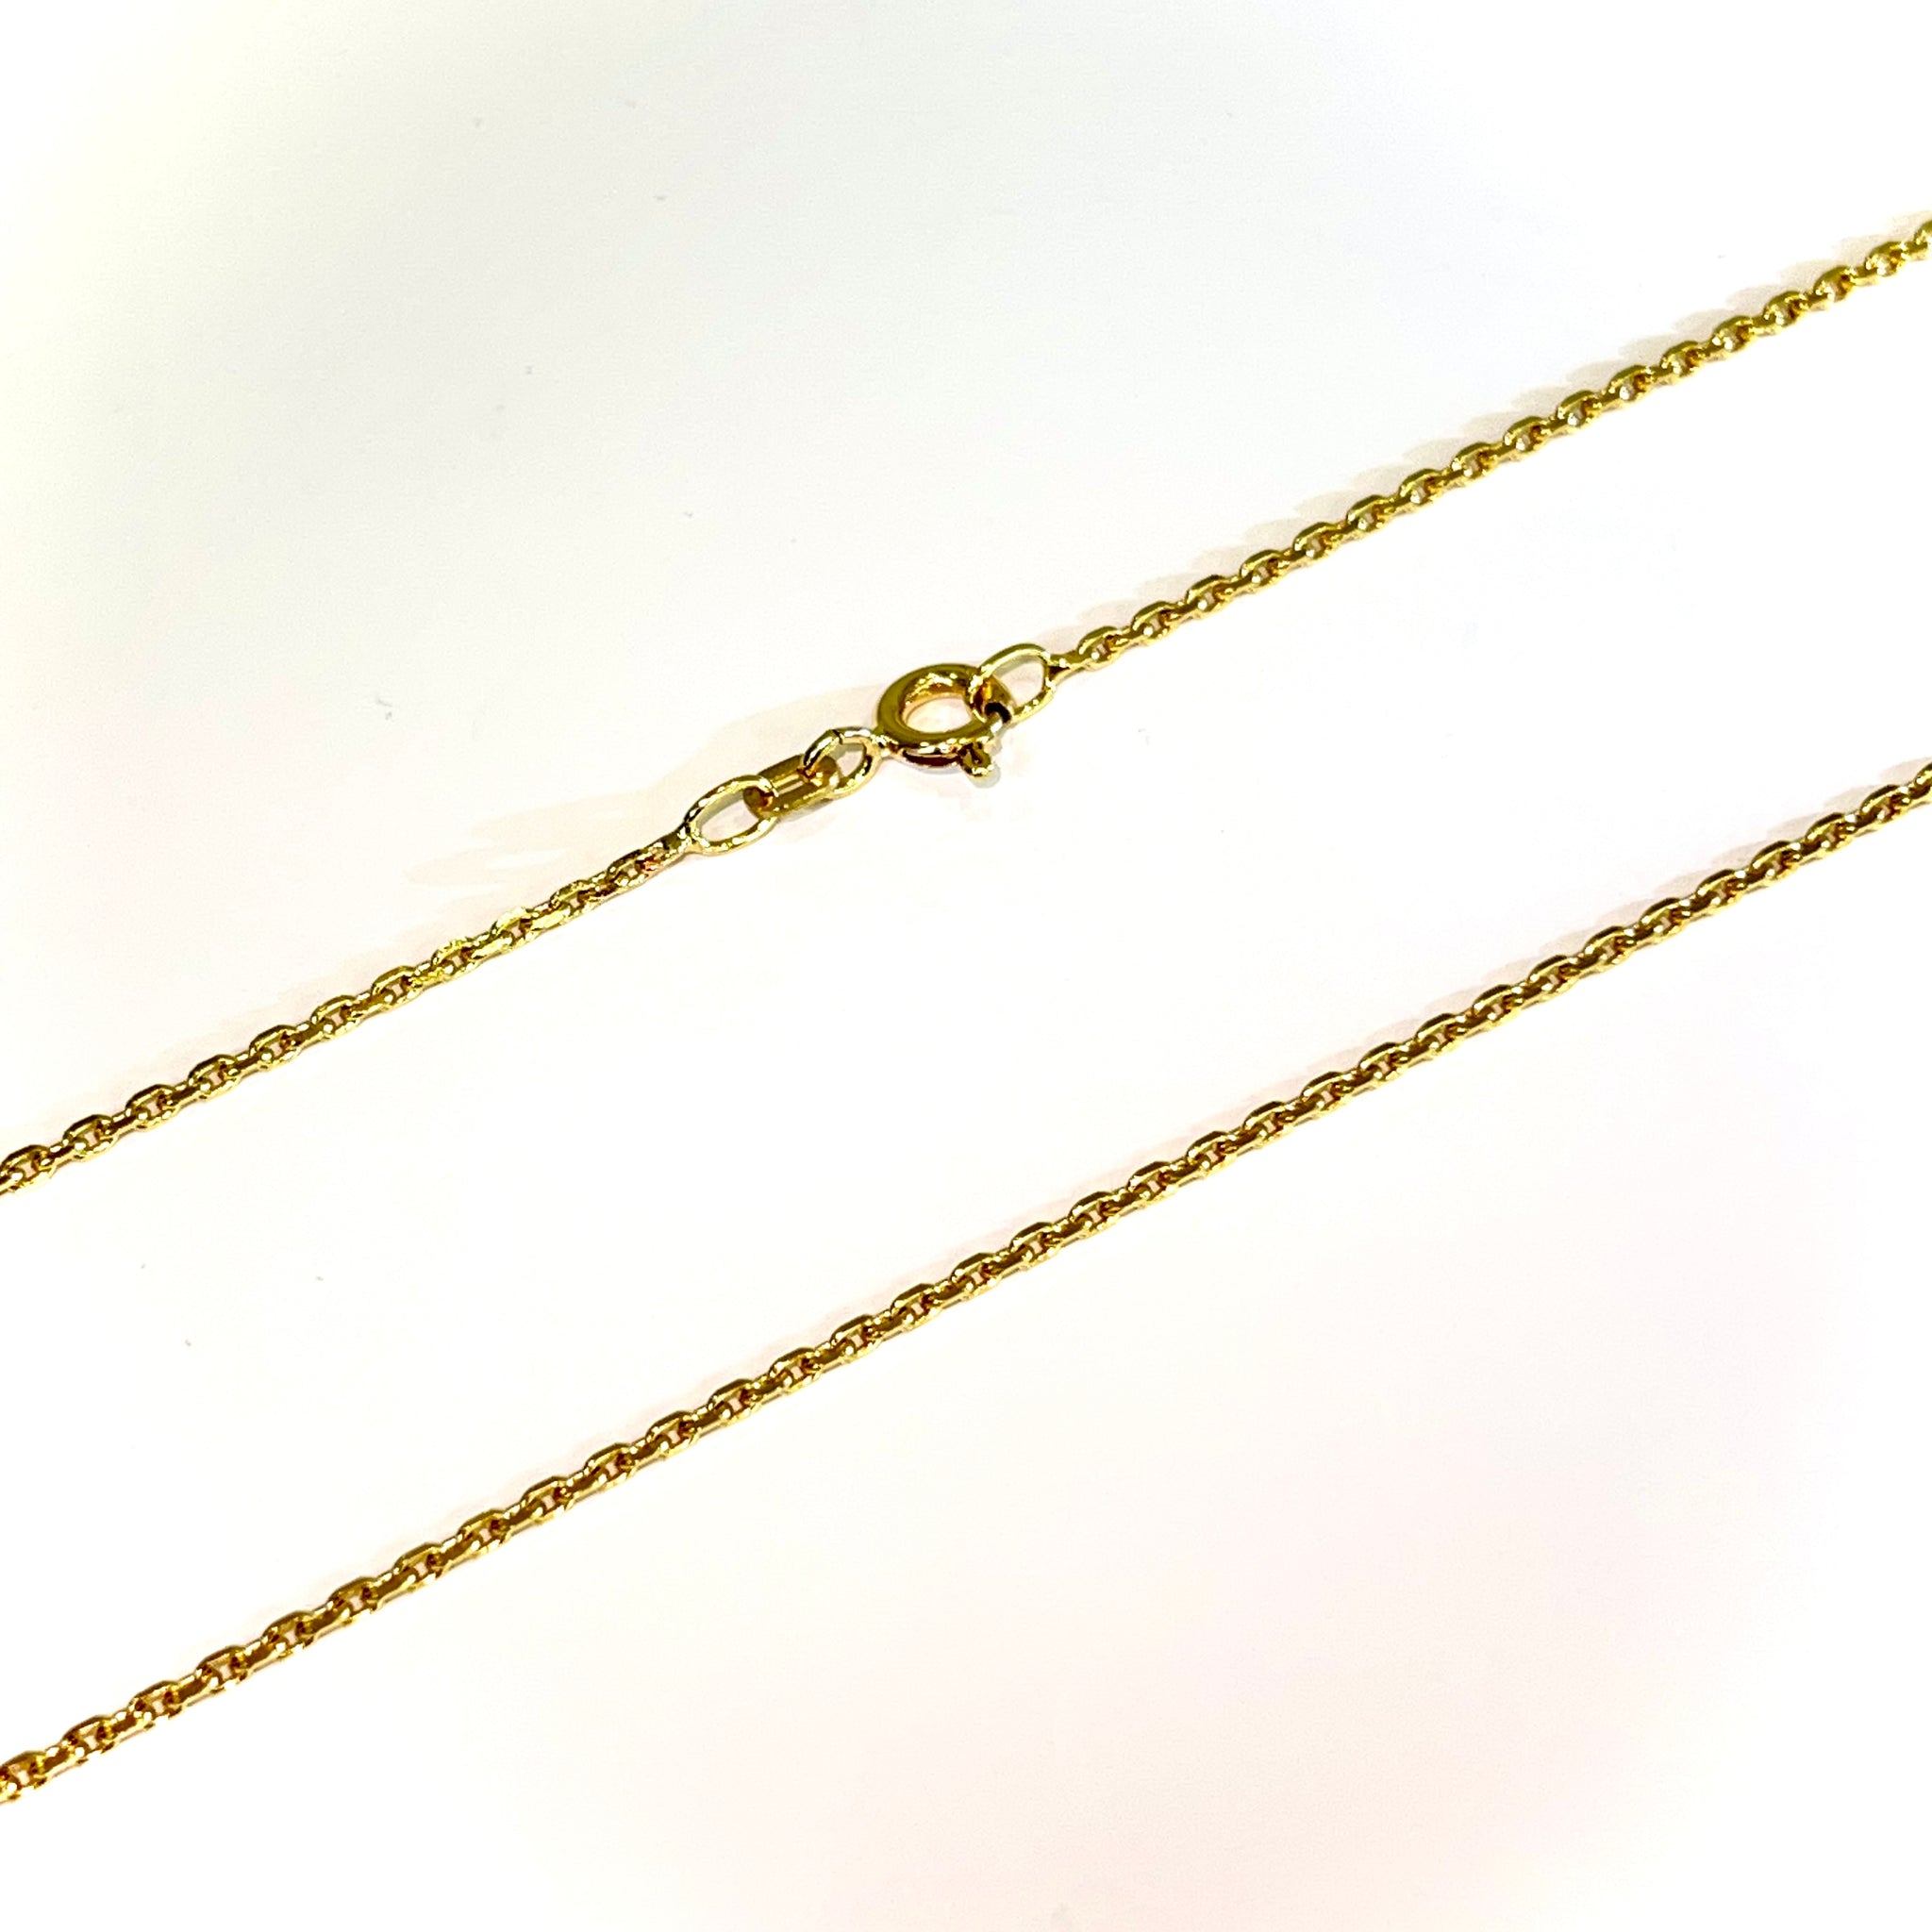 Jail Link Chain - 14 carat gold - 60cm / 4.5mm